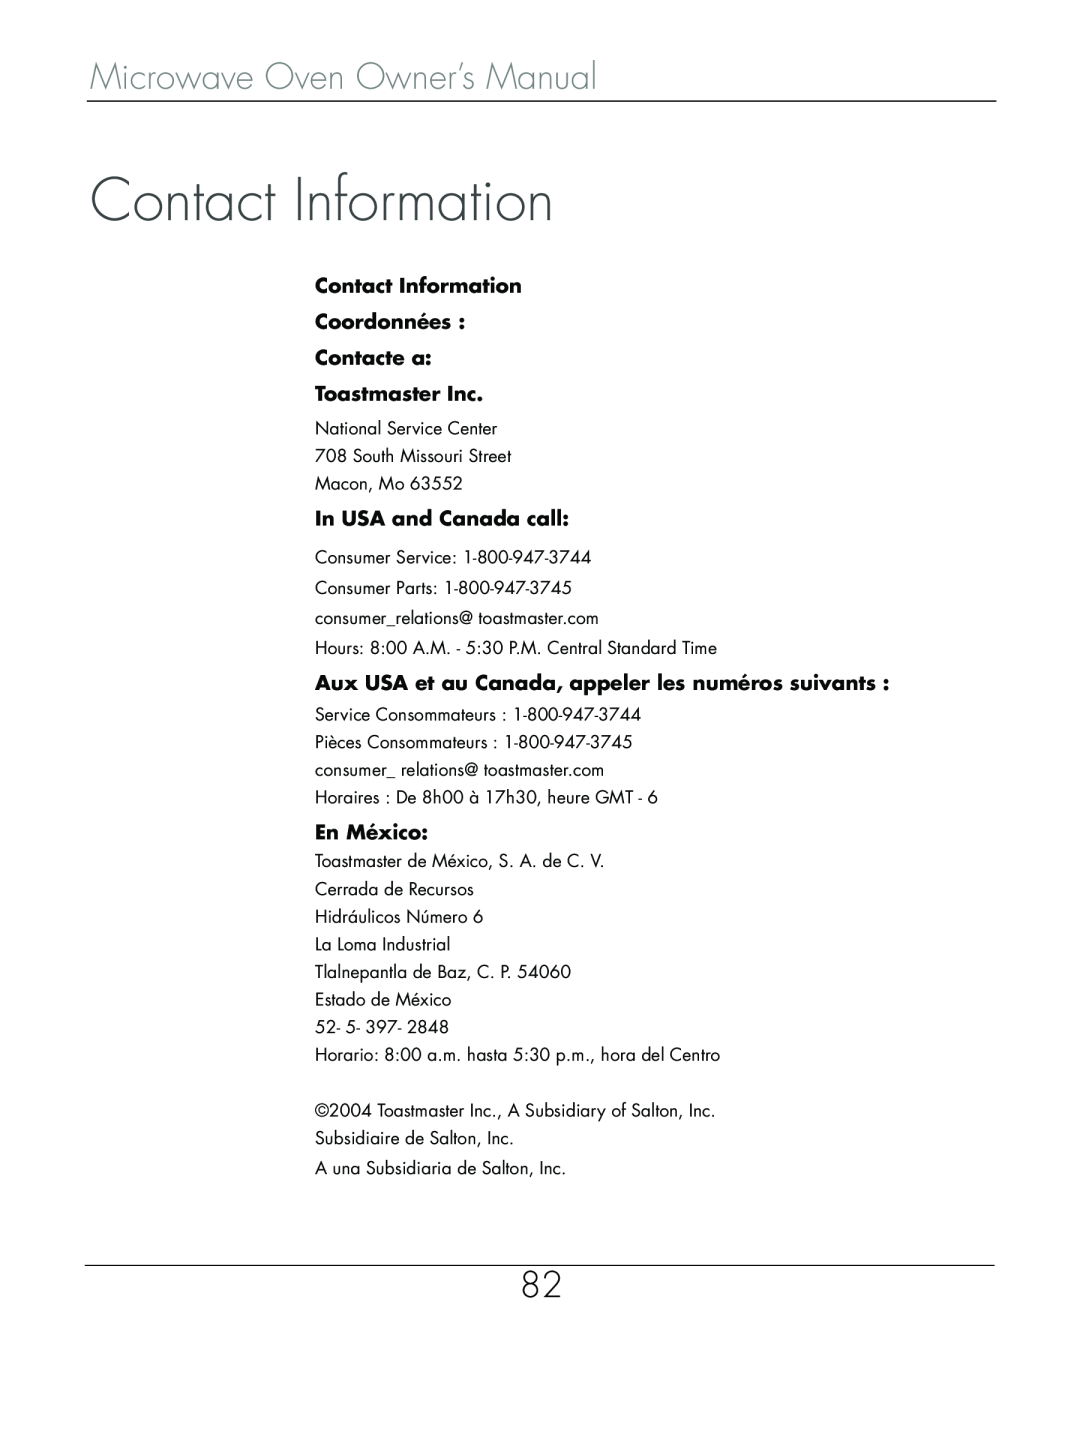 Beyond Microwace Oven Contact Information Coordonnées Contacte a Toastmaster Inc, In USA and Canada call, En México 